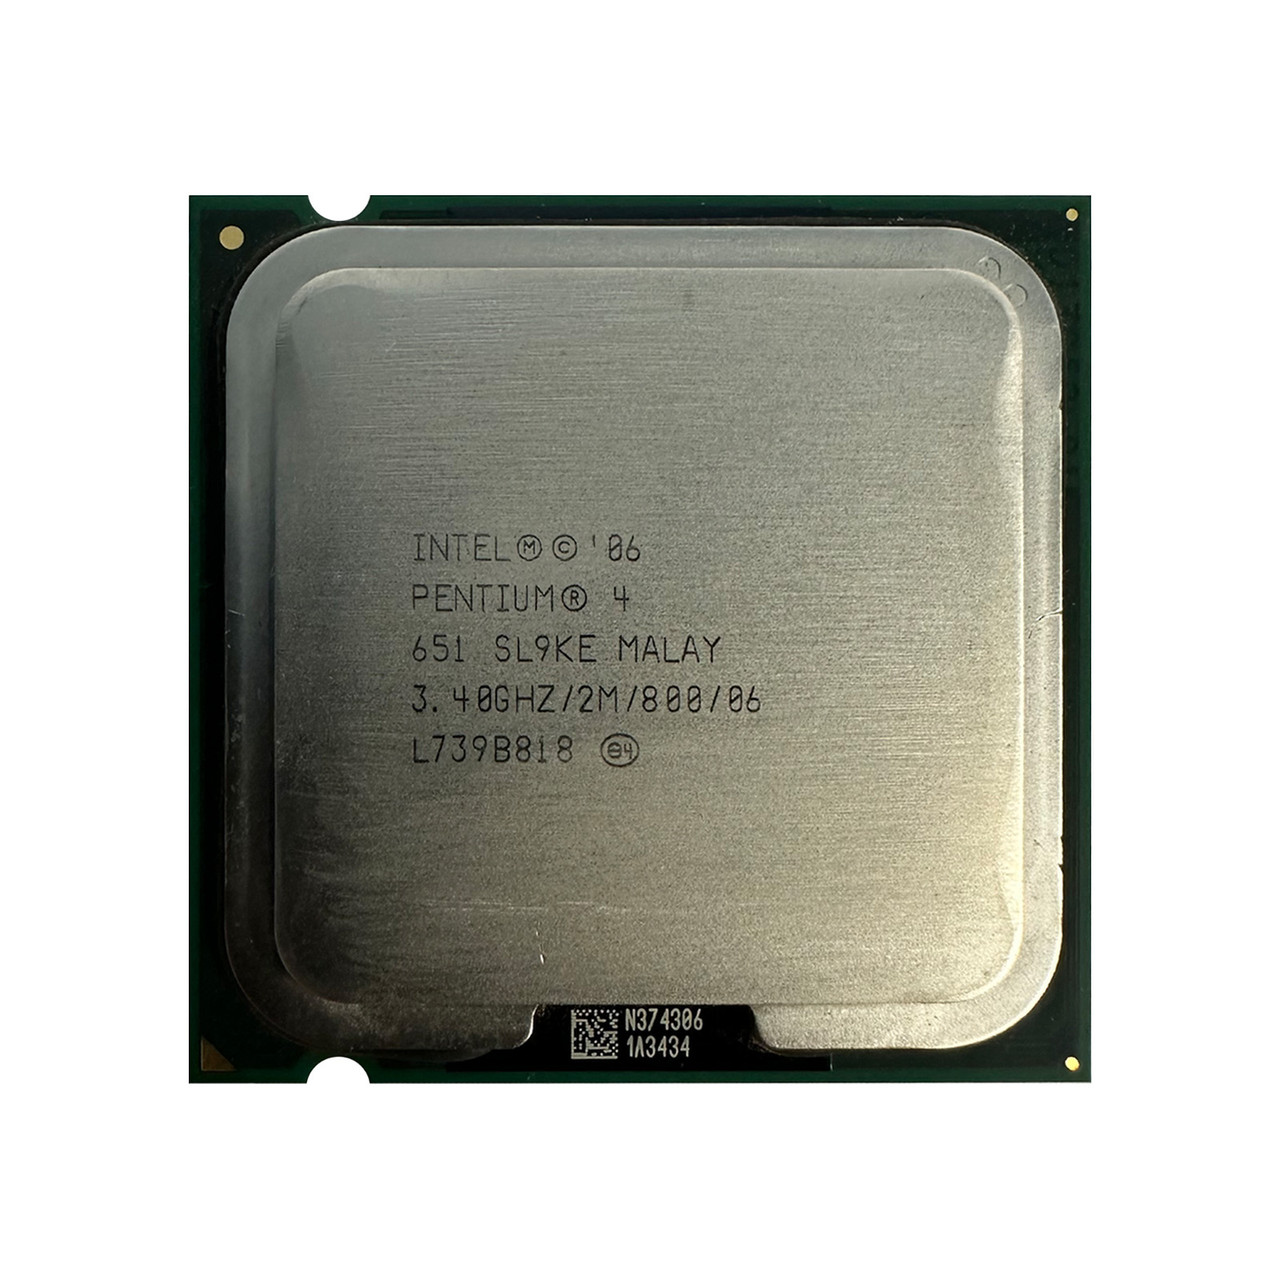 Intel SL9KE P4 651 3.4GHz 2MB 800MHz Processor